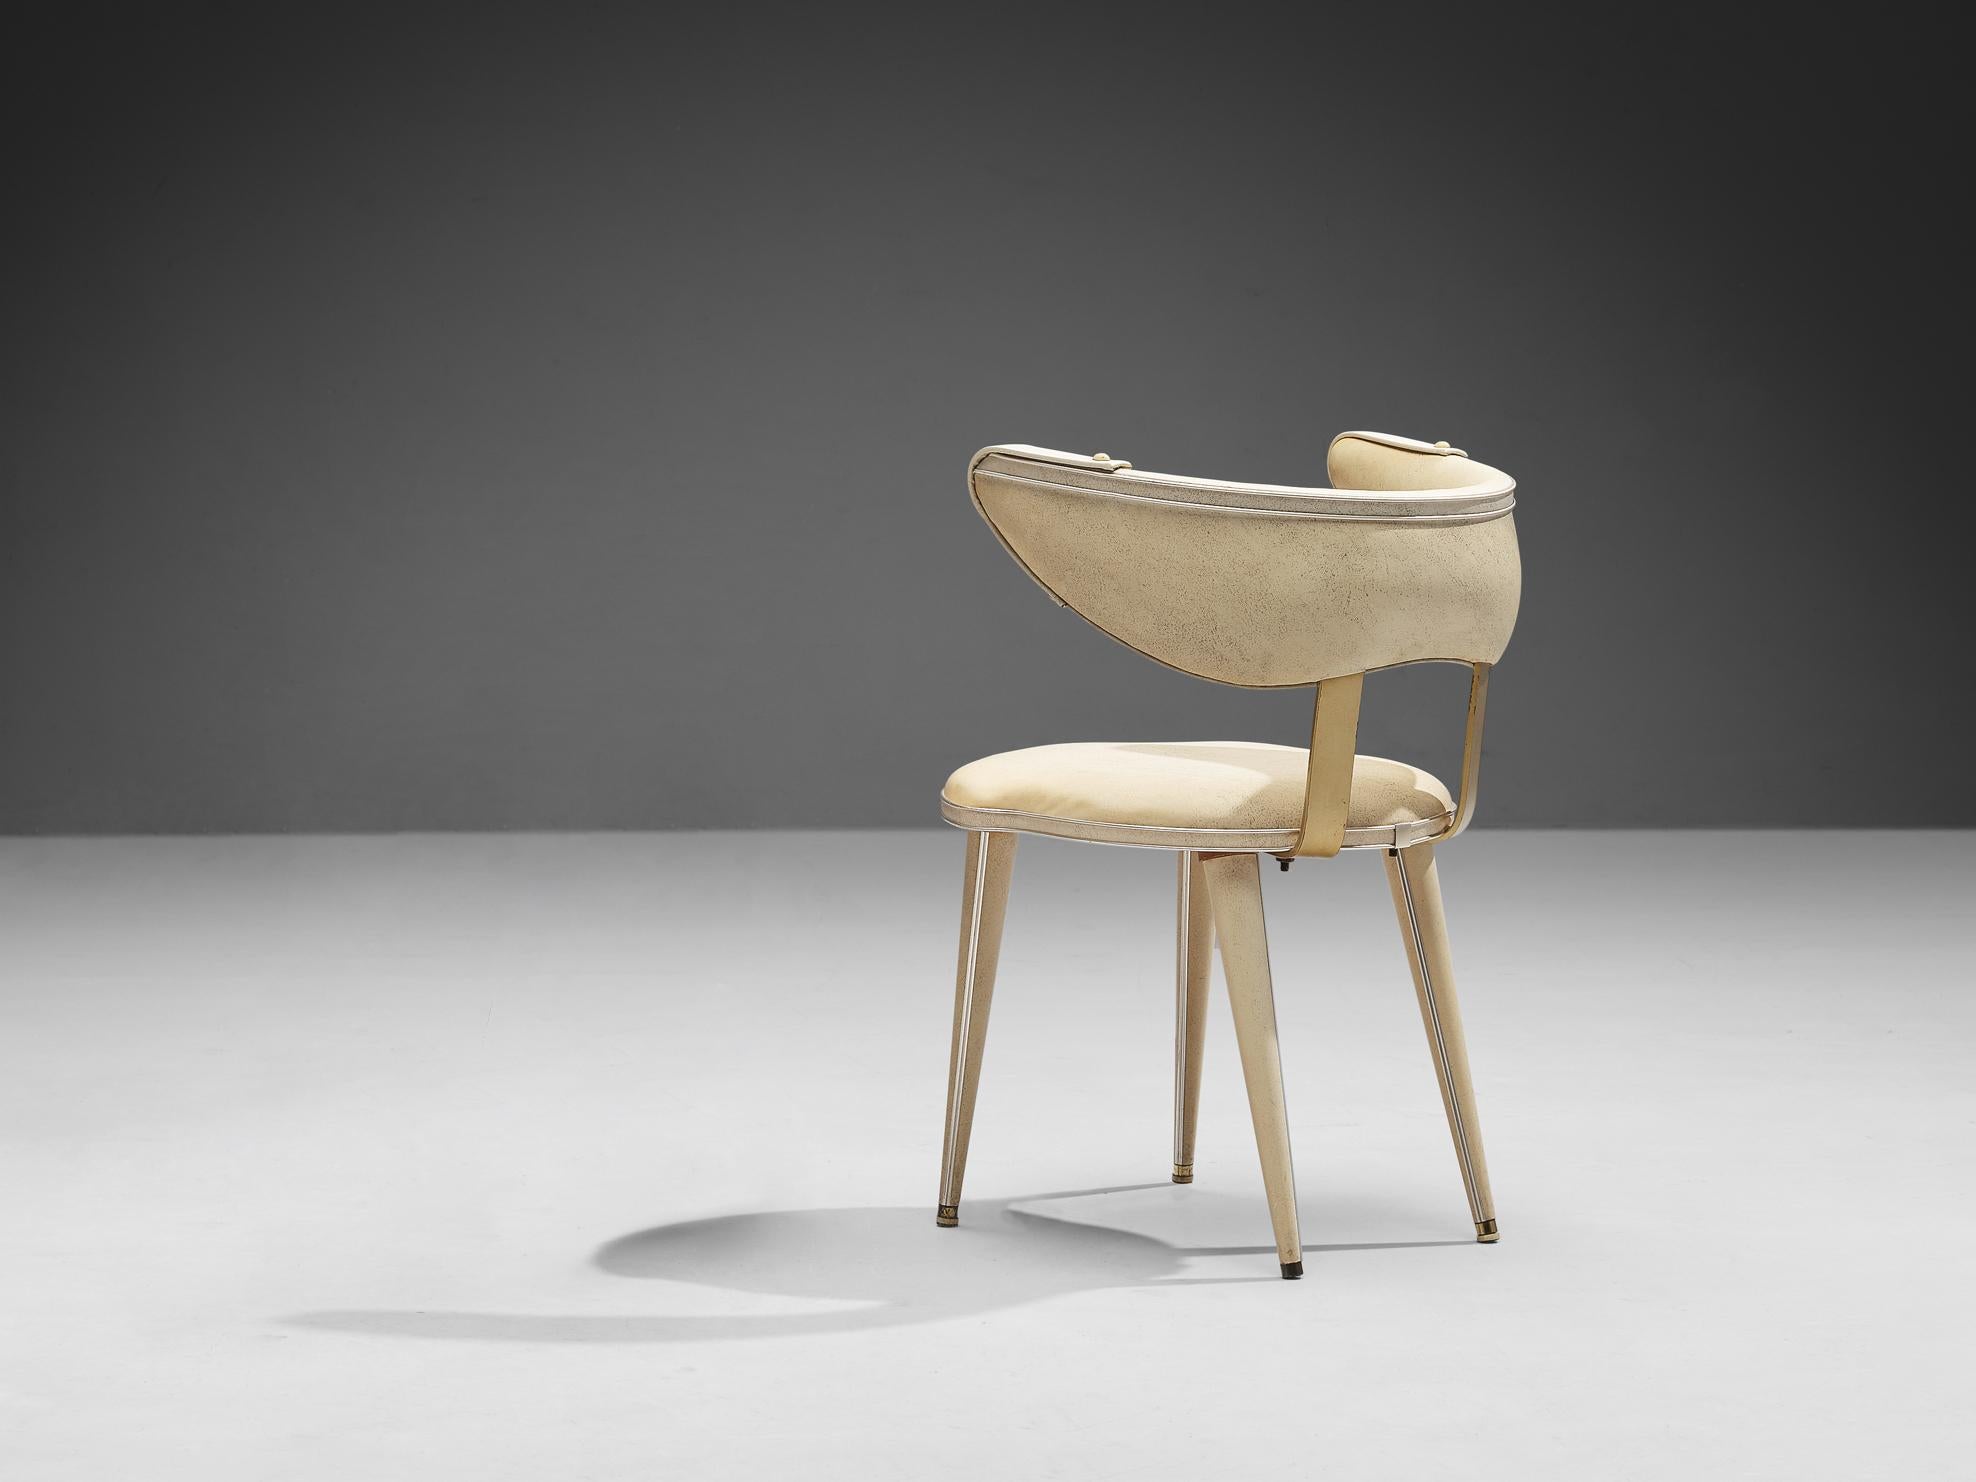 Italian Umberto Mascagni Sculptural Chair